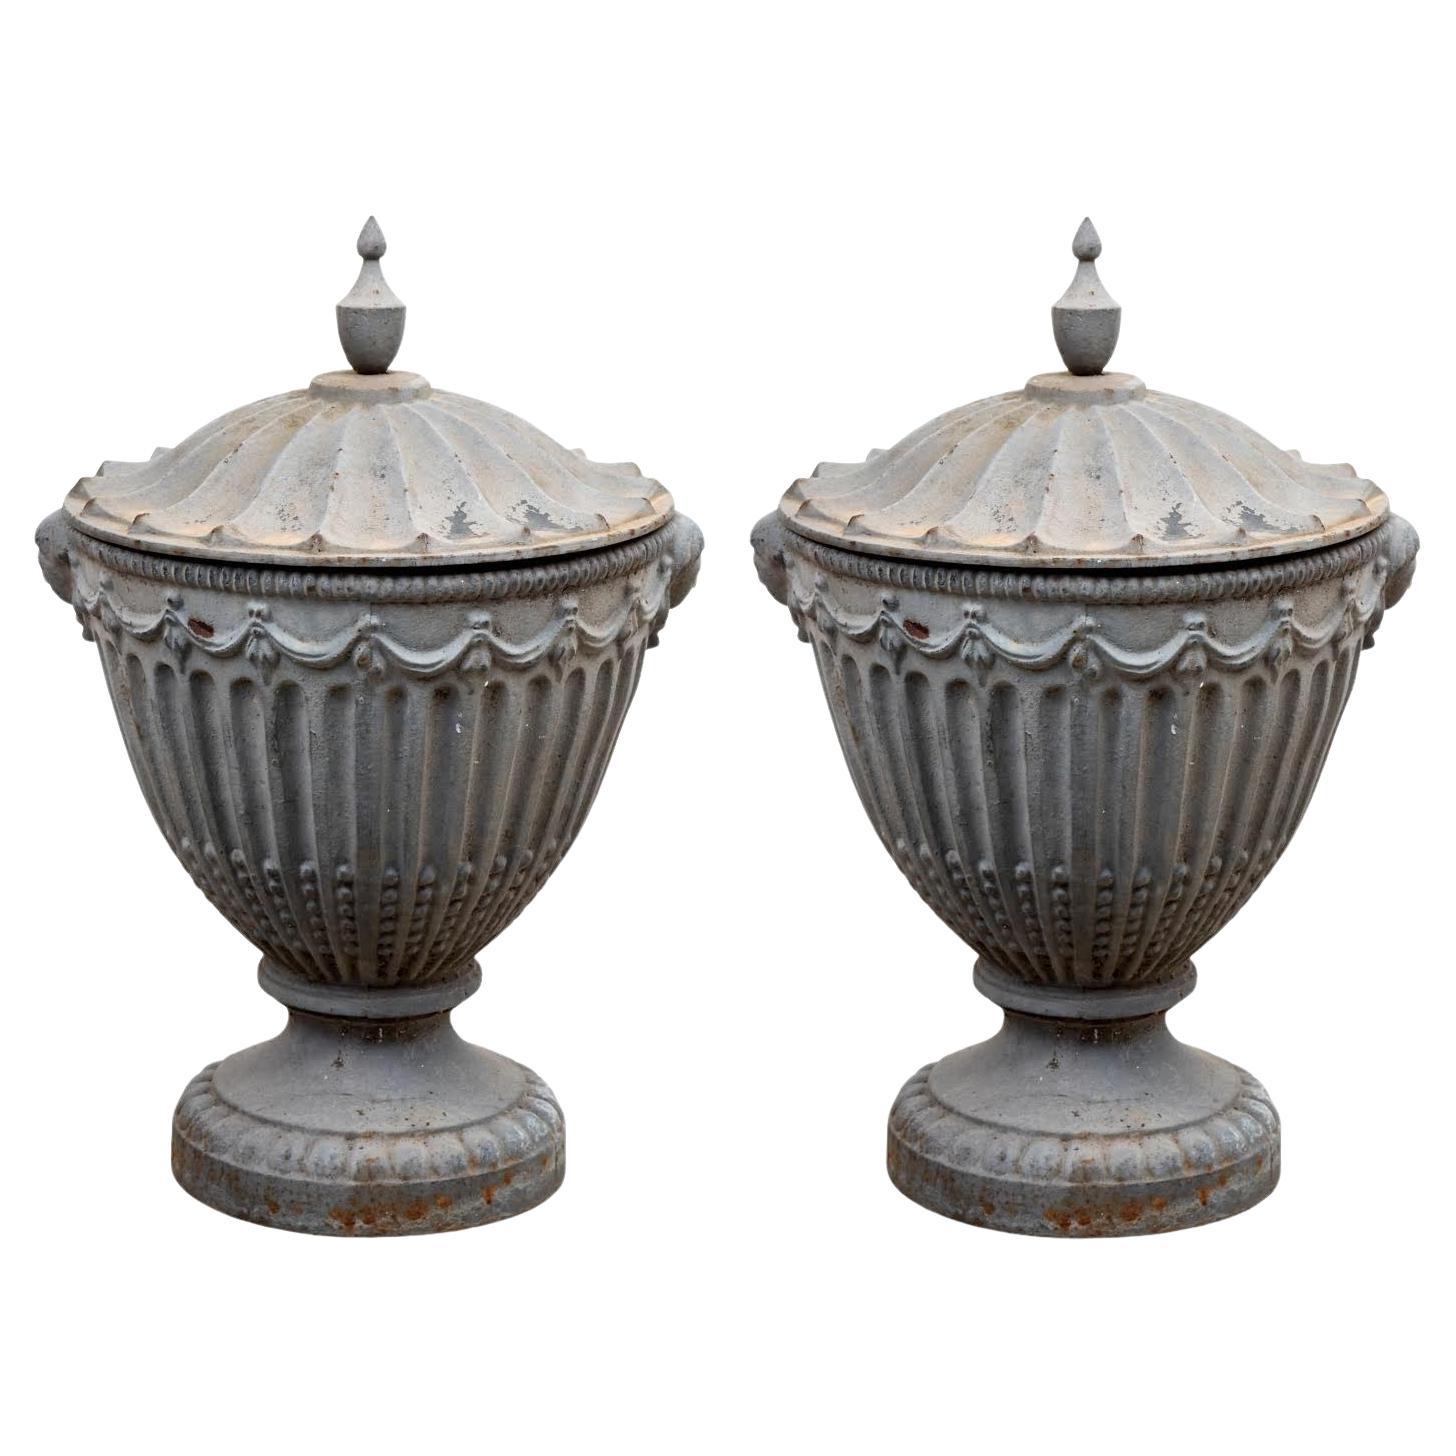 Pair of English Regency Lidded Urns, 19th Century